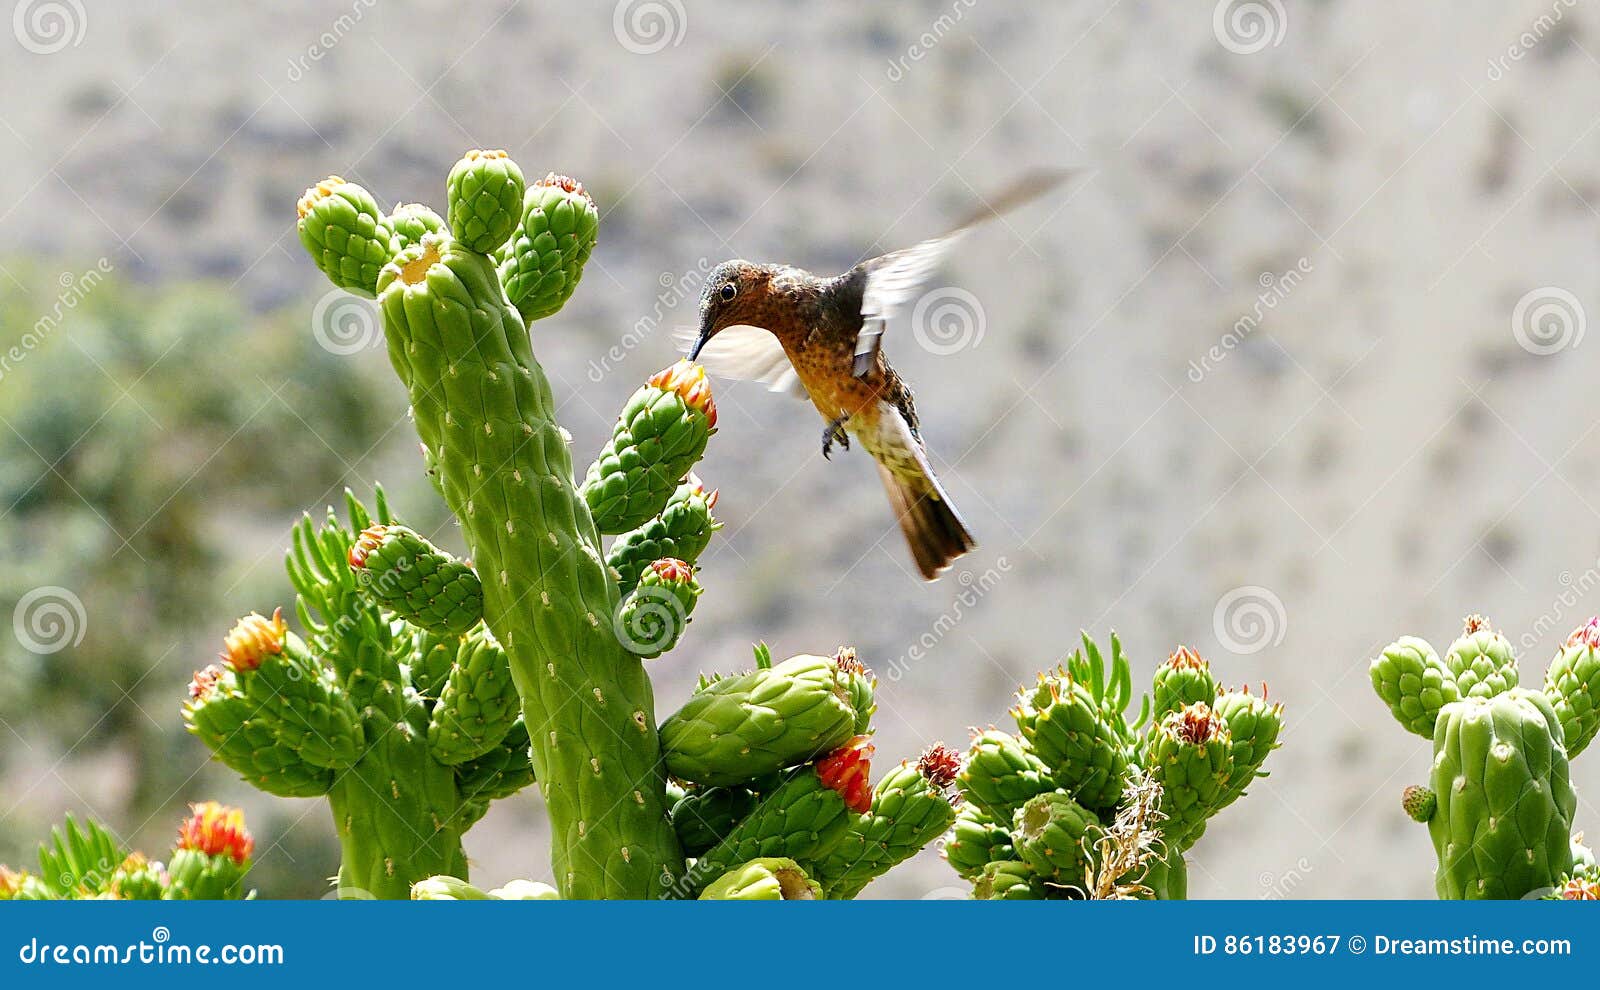 hovering hummingbird feeding on cactus flower